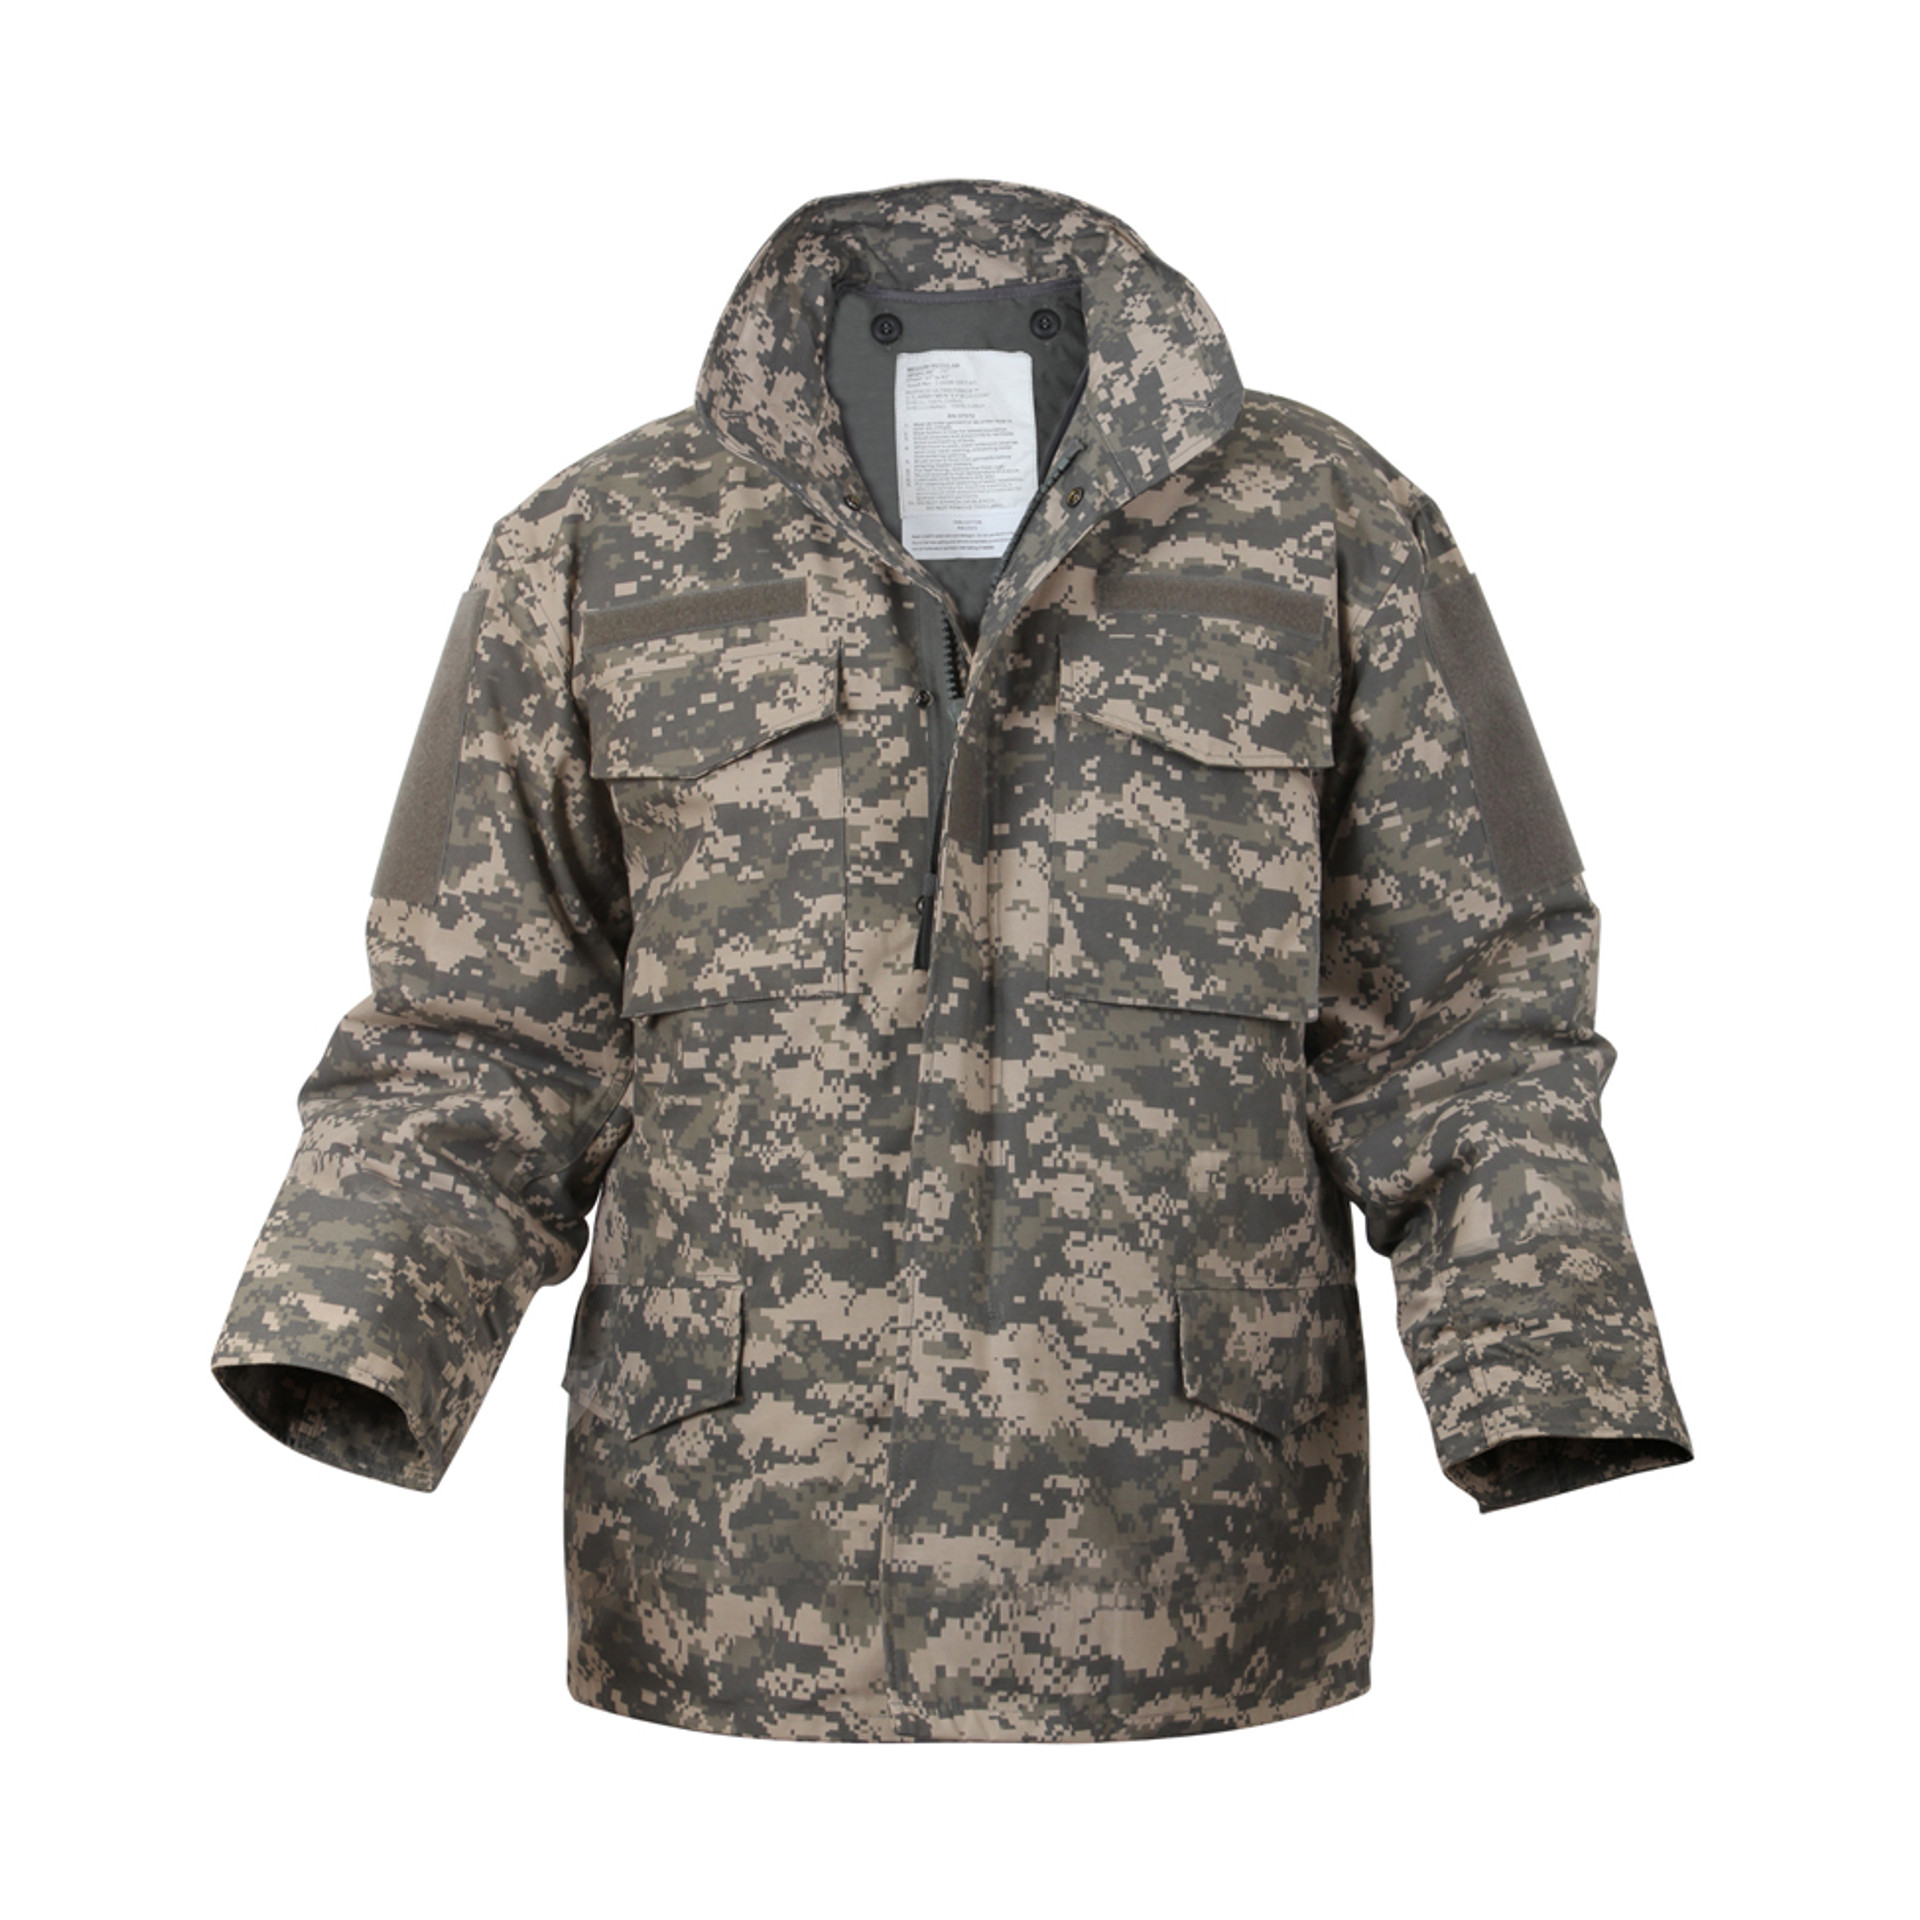 Shop Military Woodland Digital Camo M-65 Field Jackets - Fatigues Army Navy